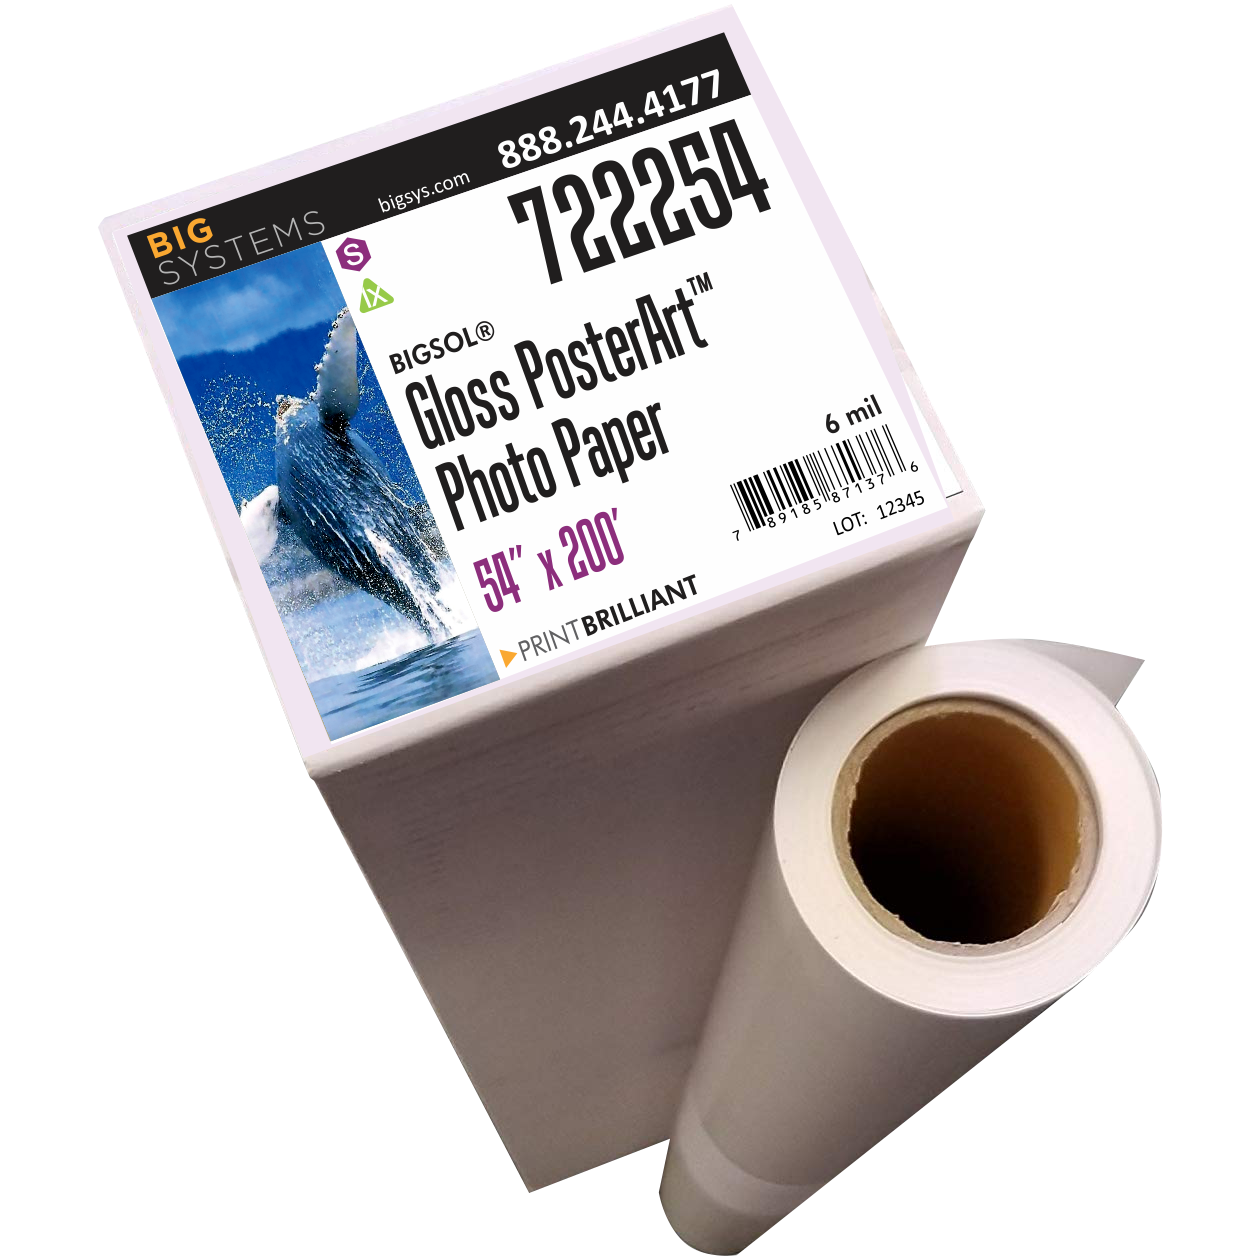 BigSol® 722 Gloss PosterArt Paper 130g